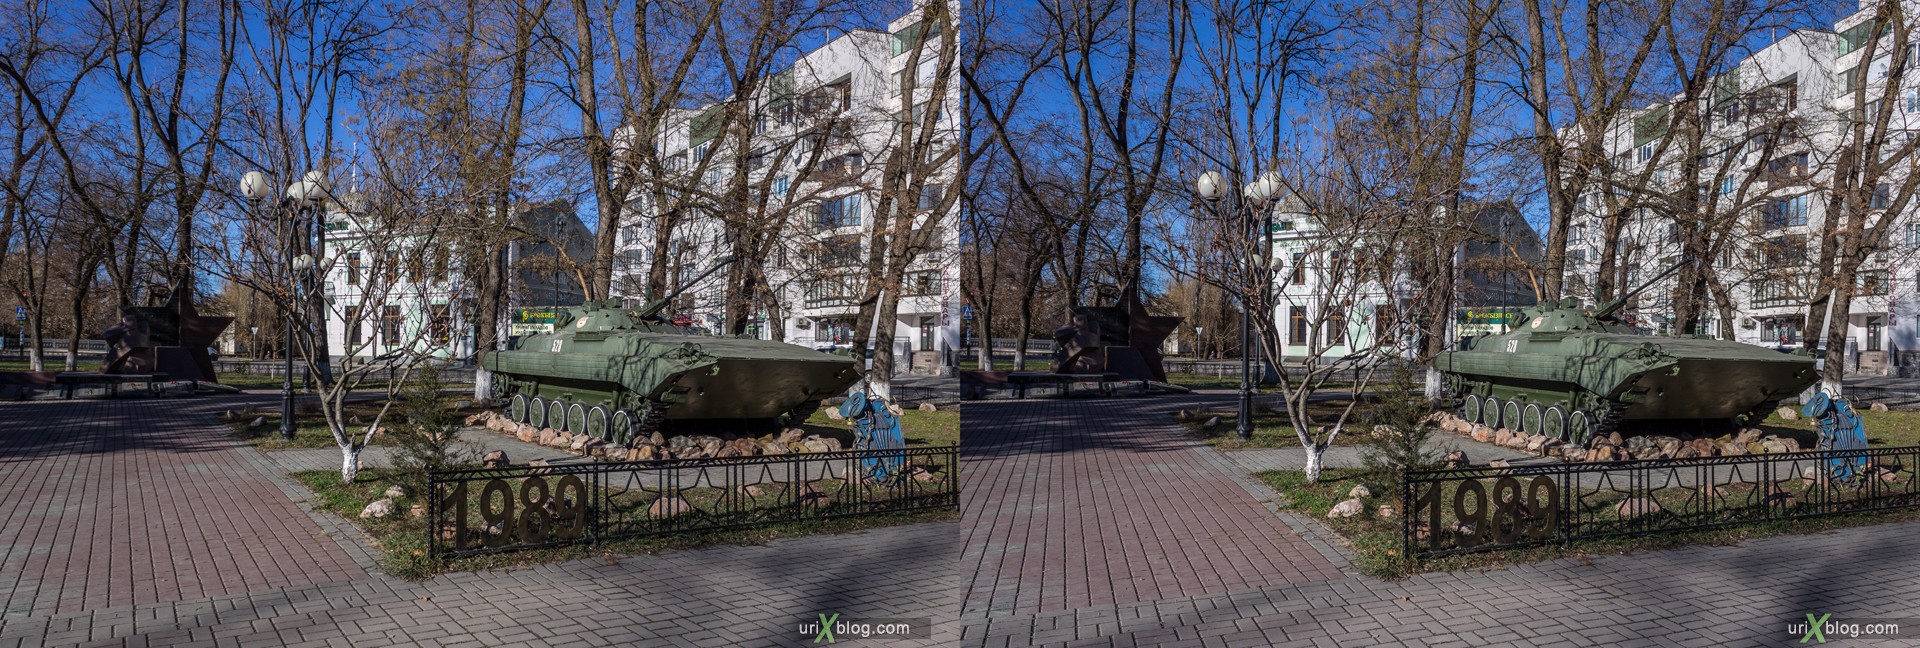 2012, Simferopol, Crimea, Russia, Ukraine, winter, 3D, stereo pair, cross-eyed, crossview, cross view stereo pair, stereoscopic